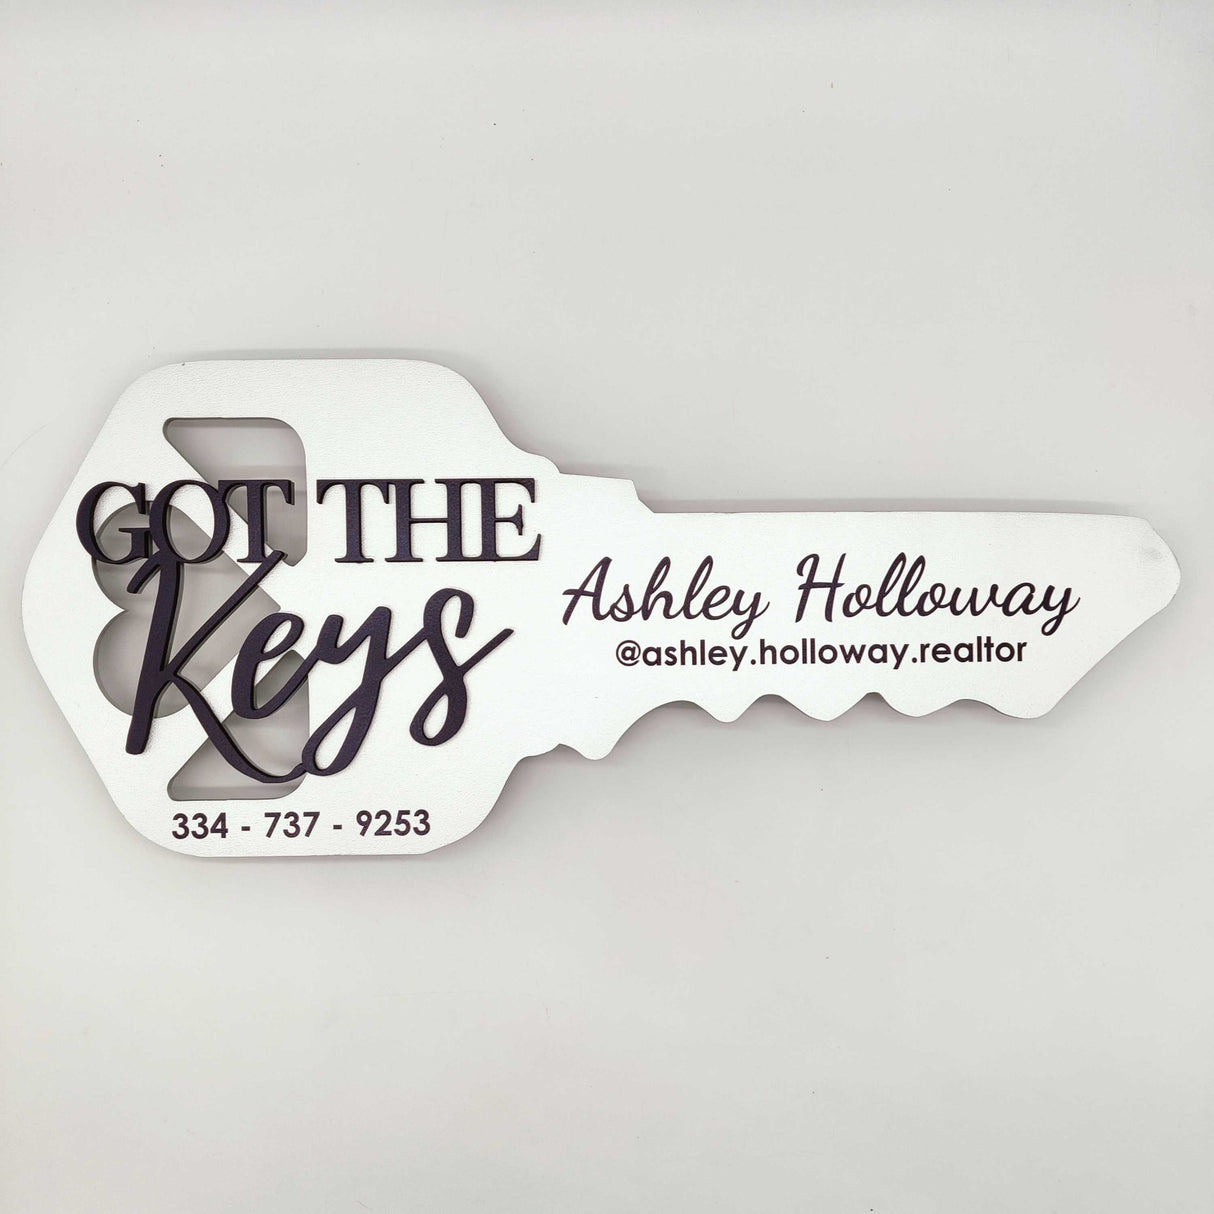 Key Shaped Props Got the keys - Real Estate Store